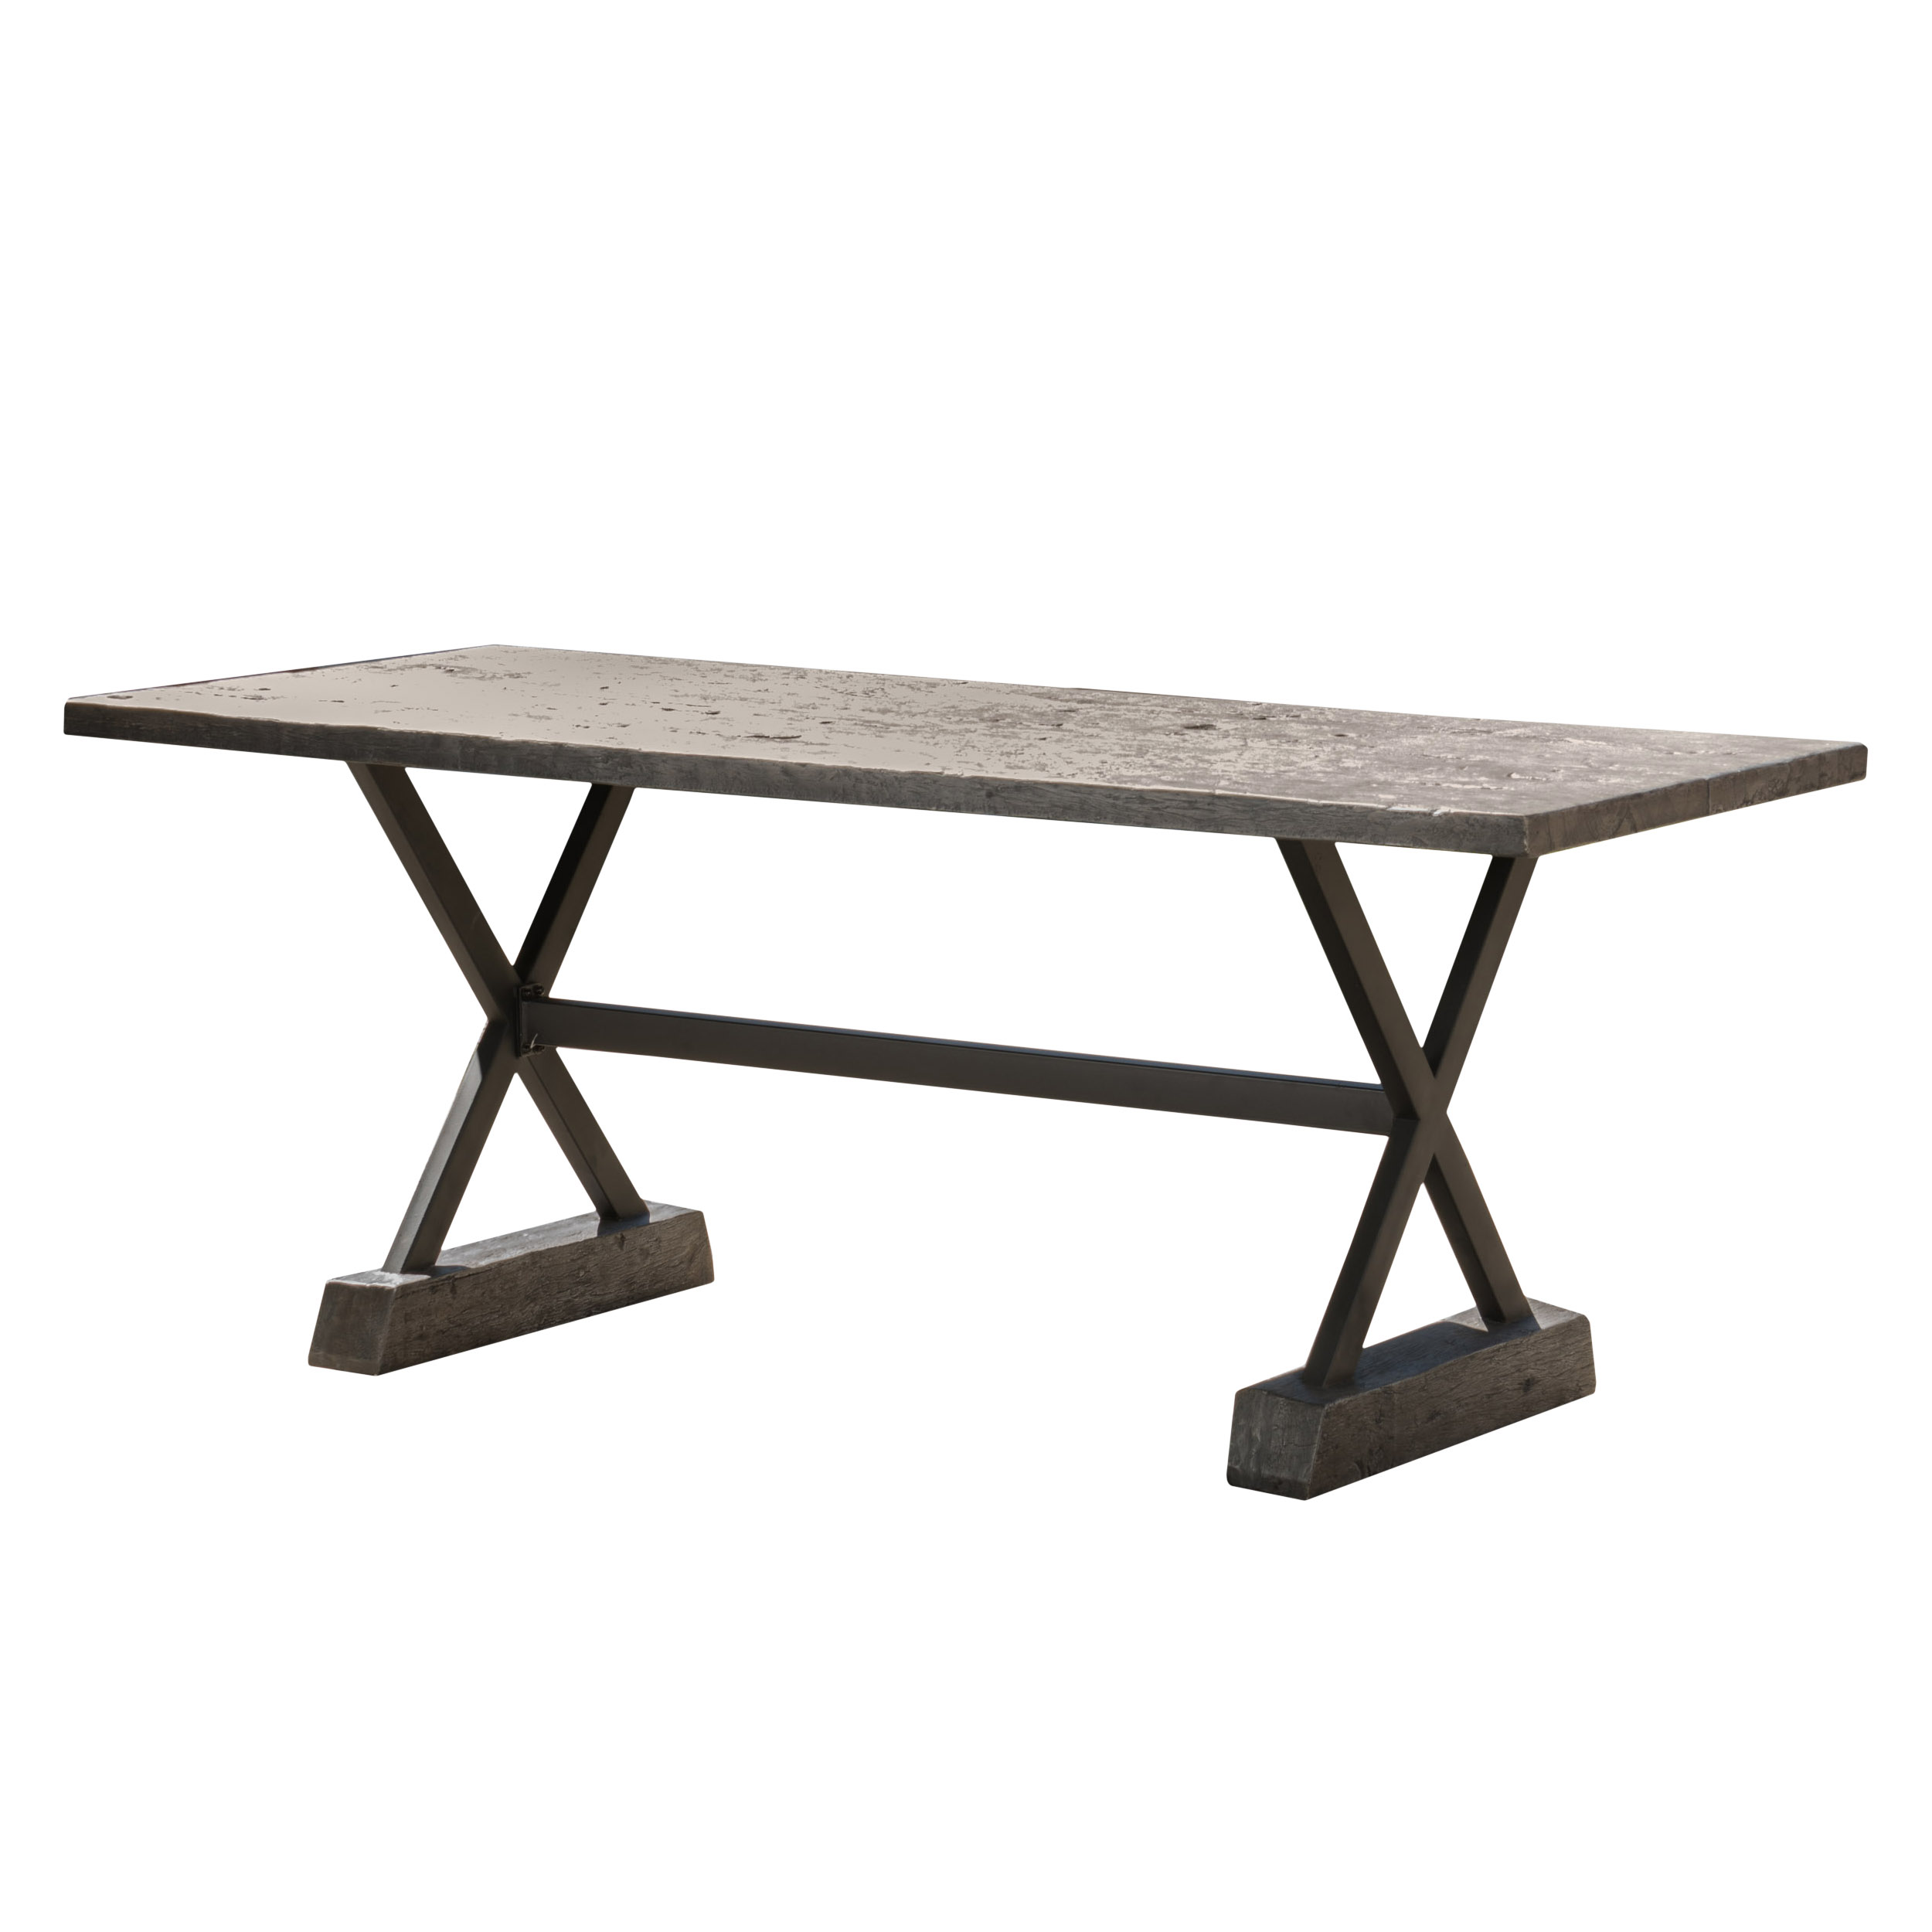 GDF Studio Kylan Outdoor Lightweight Concrete Rectangular Dining Table, Metal Frame, Brown and Black - image 1 of 2